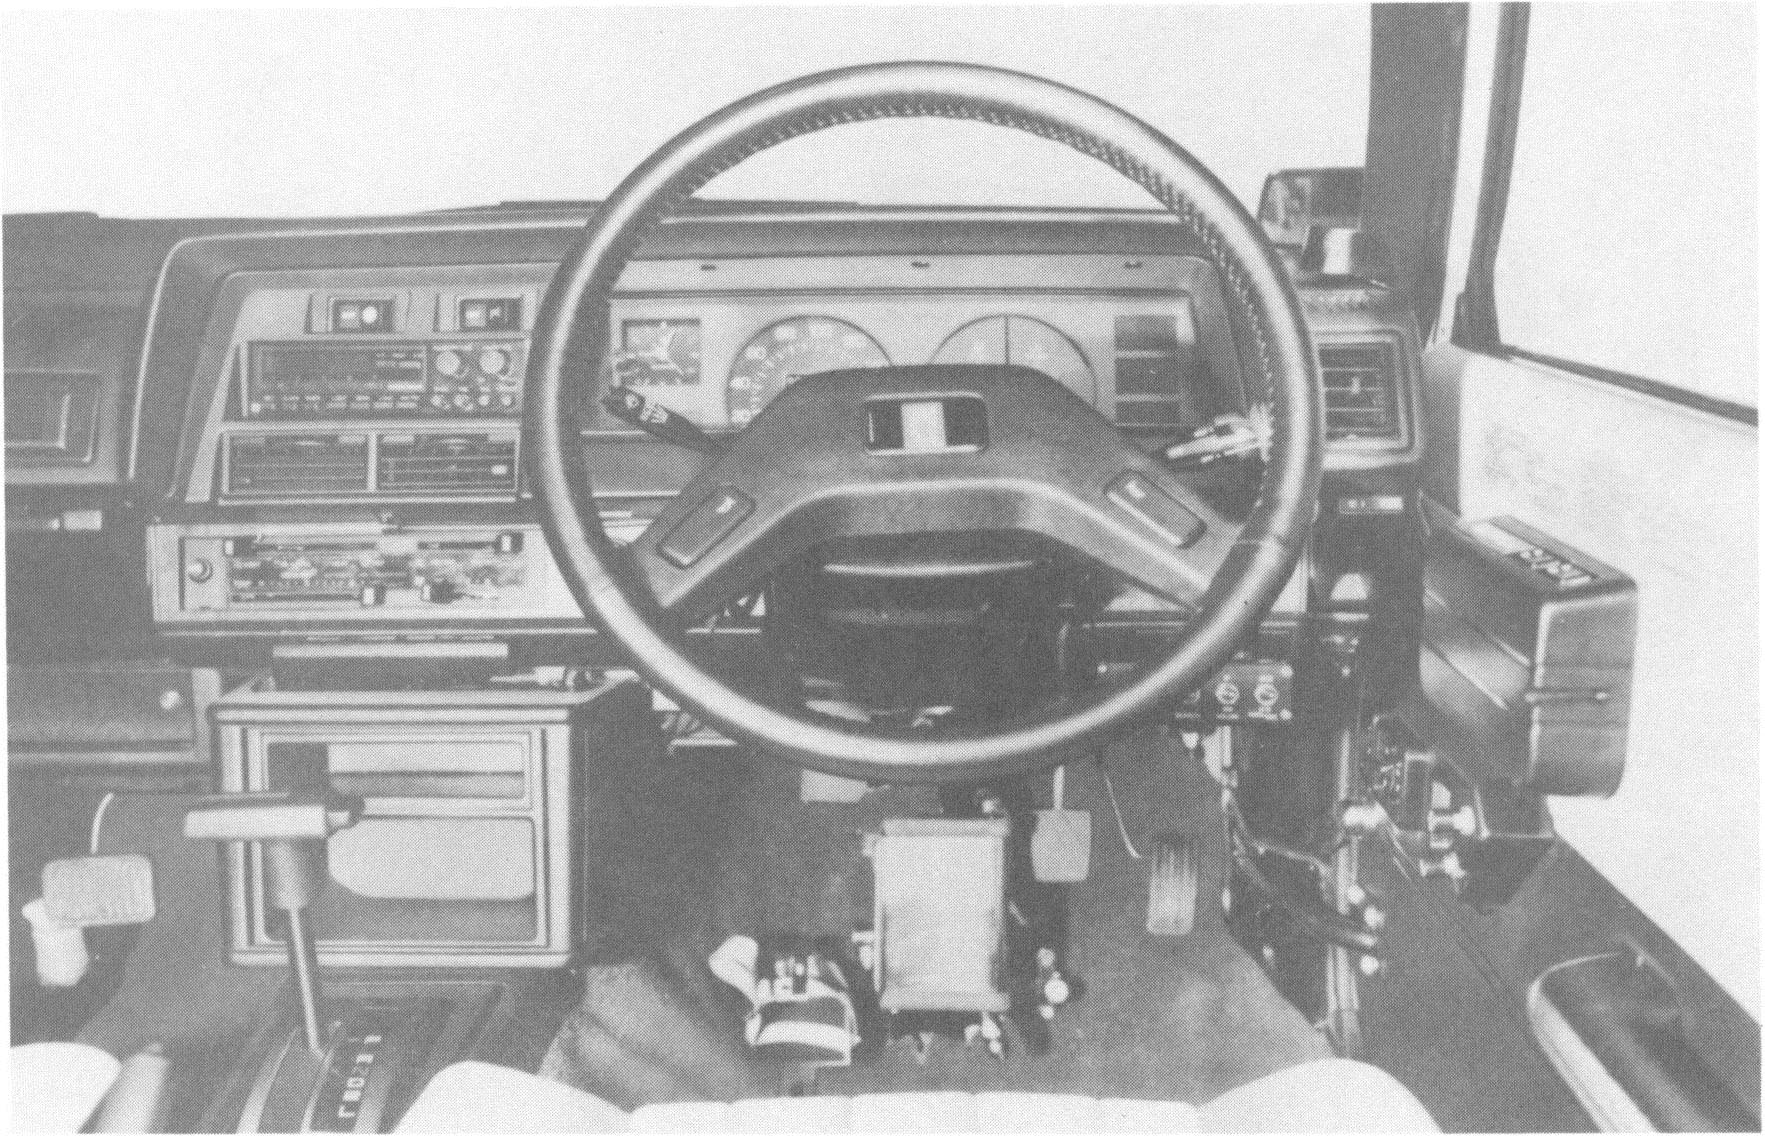 DRIVER'S AREA IN "COROLLA FRIENDMATIC II"